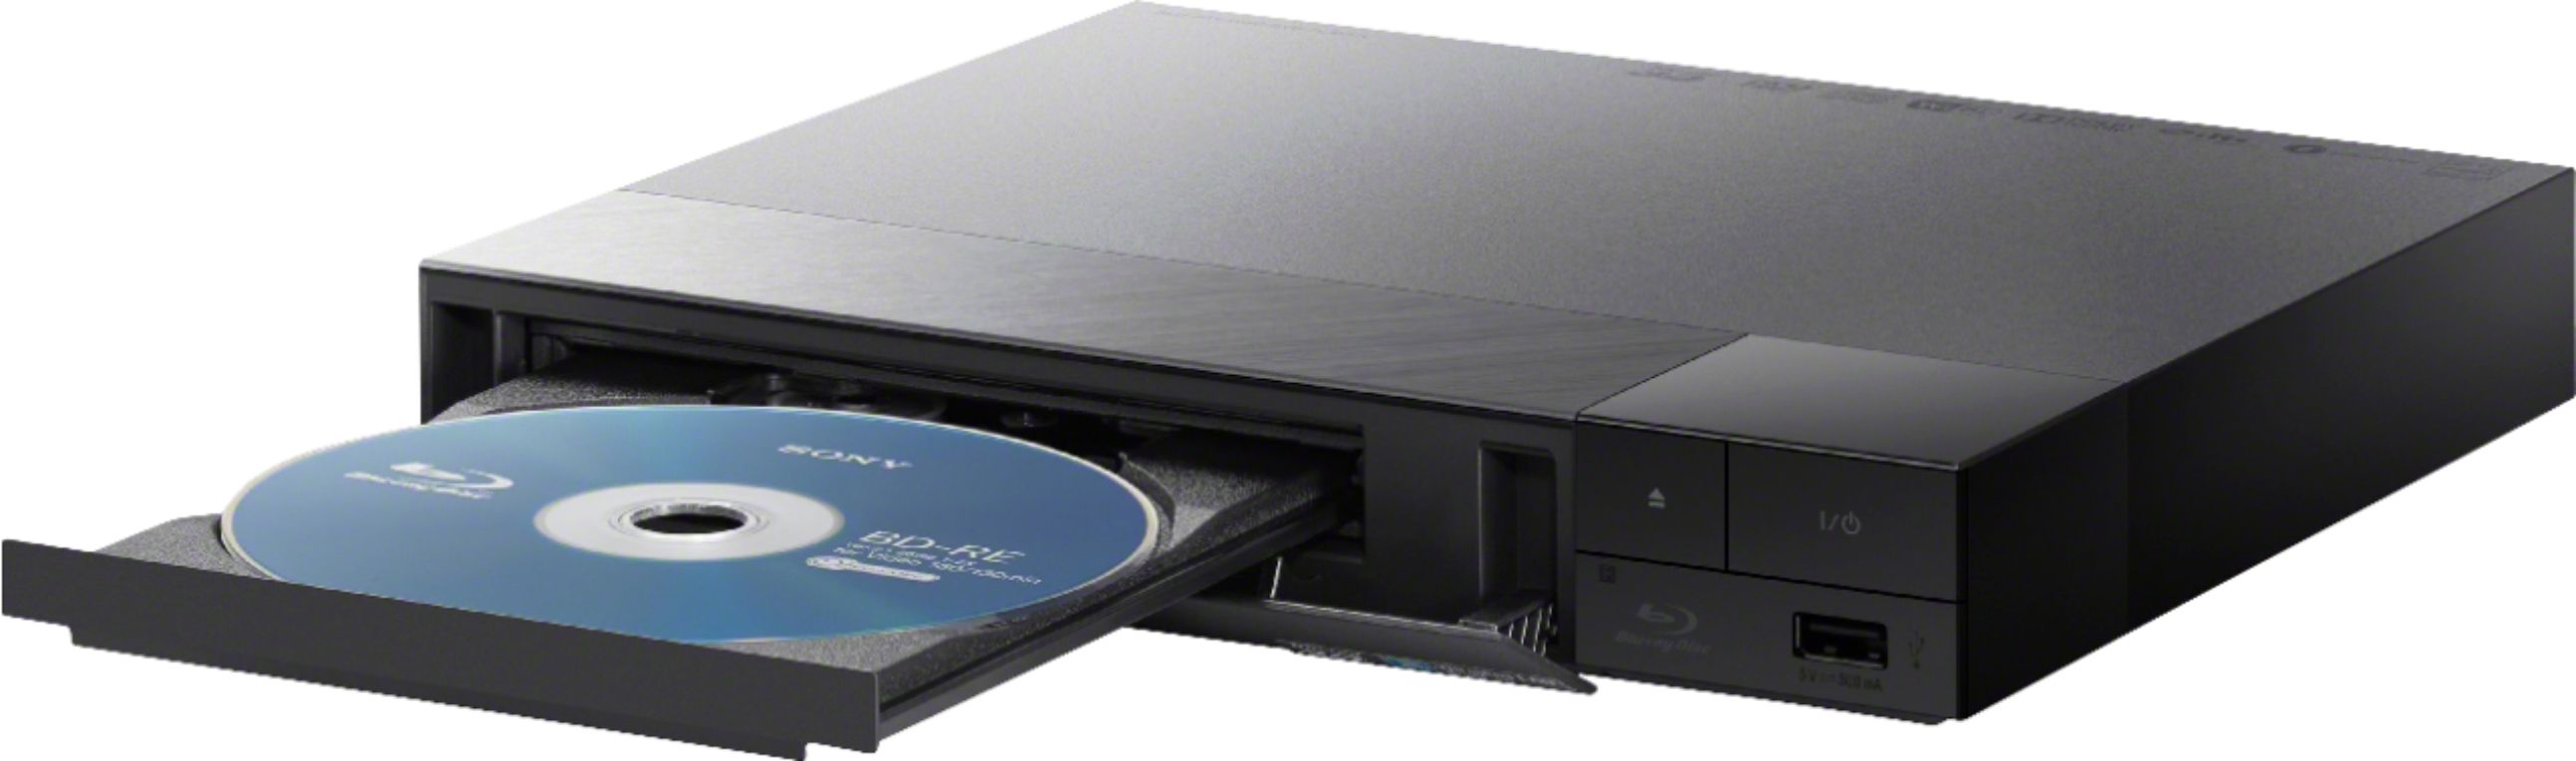 Sony UBP-X700 4K Ultra HD Home Theater Streaming Blu-ray DVD